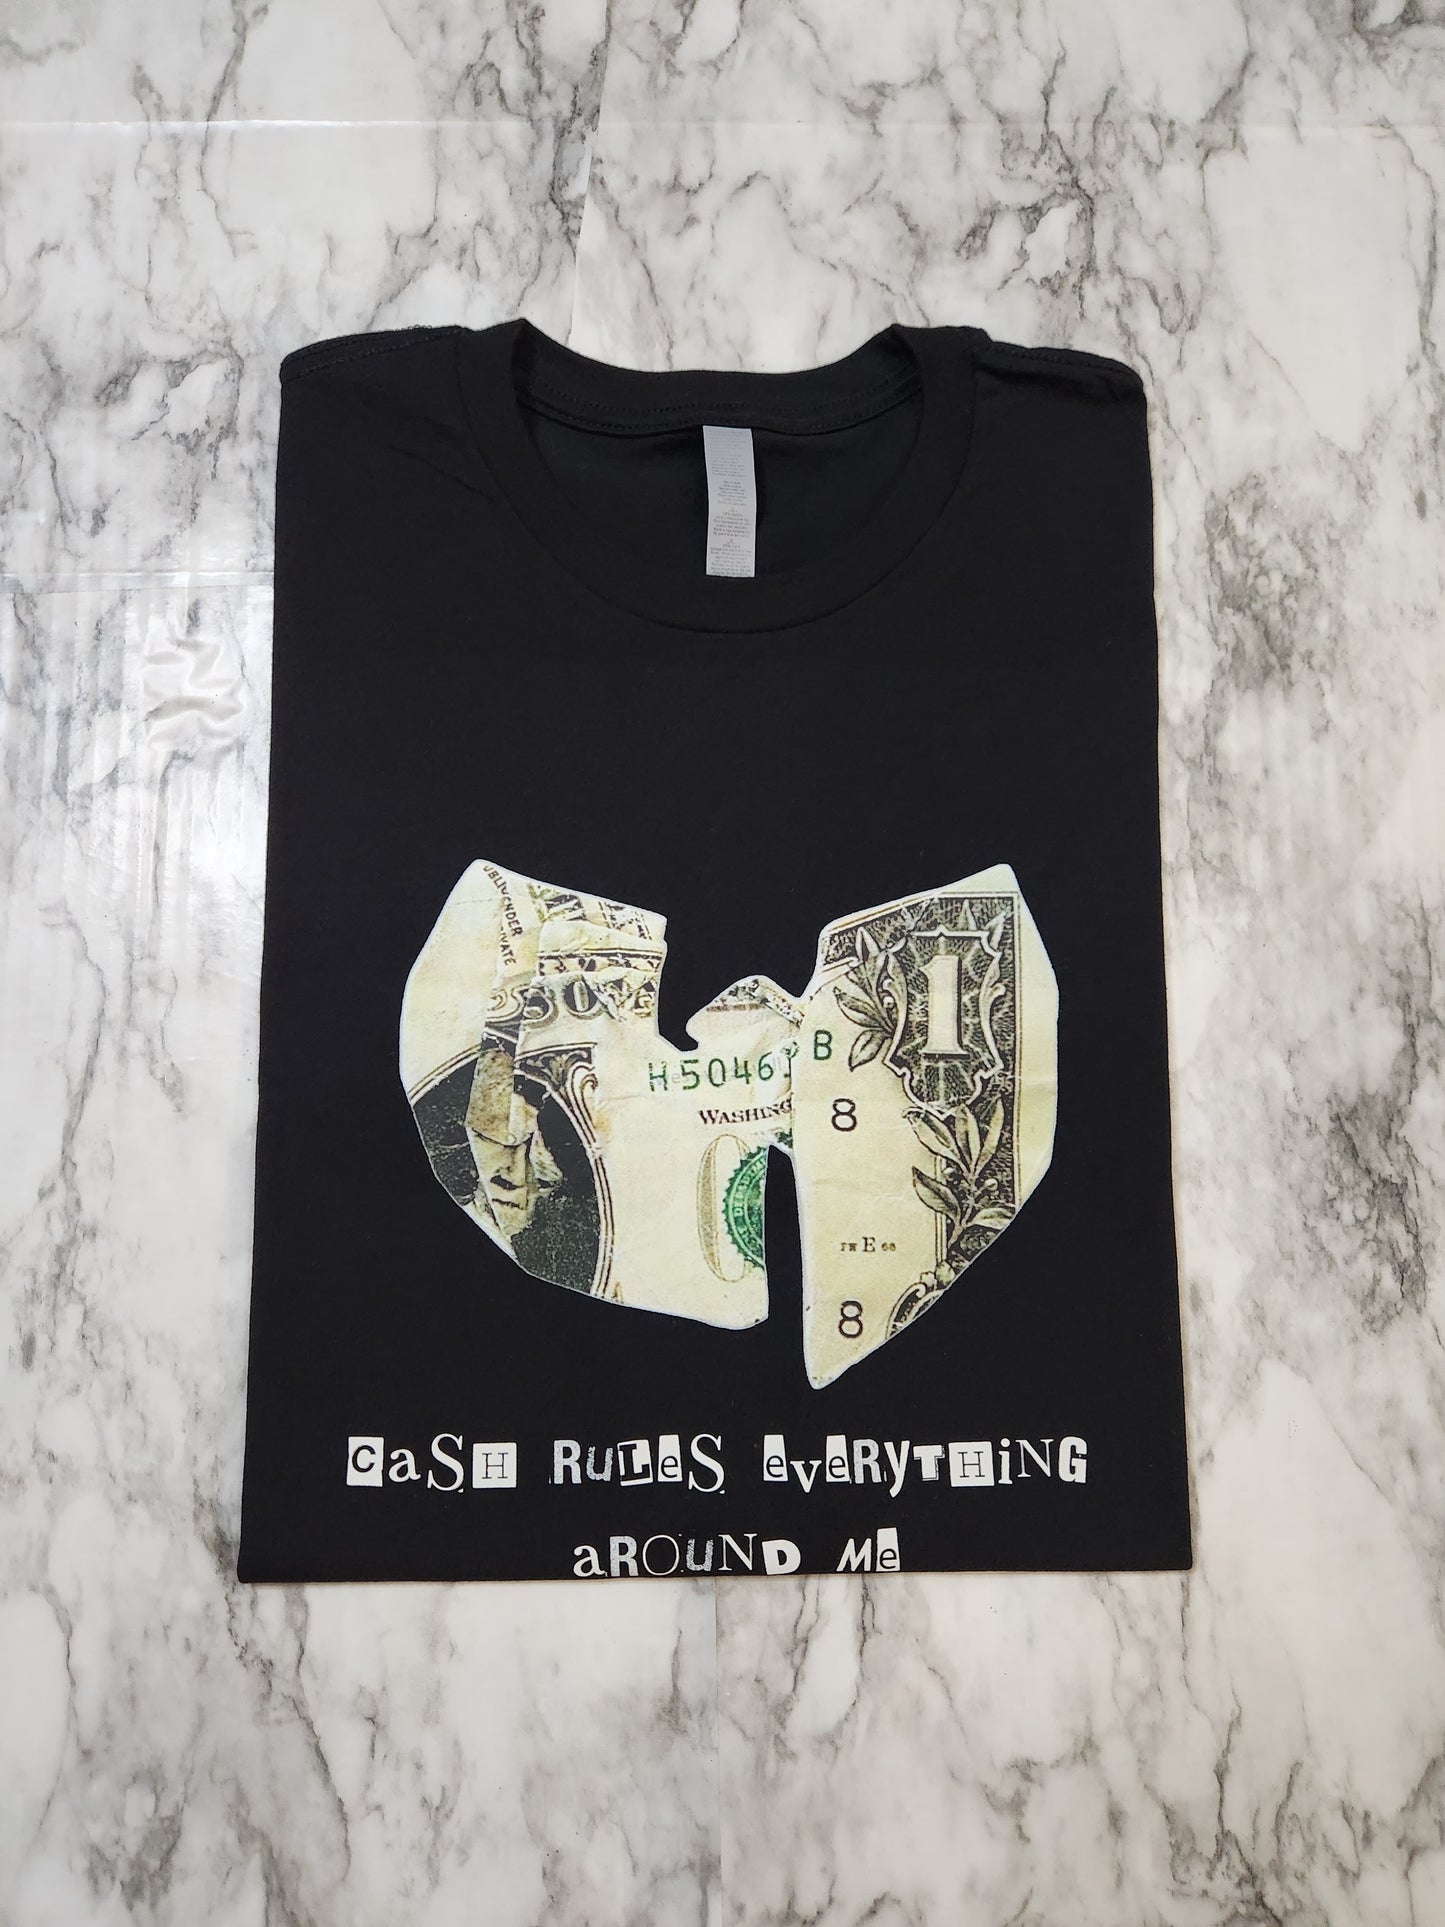 Cash Rules T-Shirt (Black)